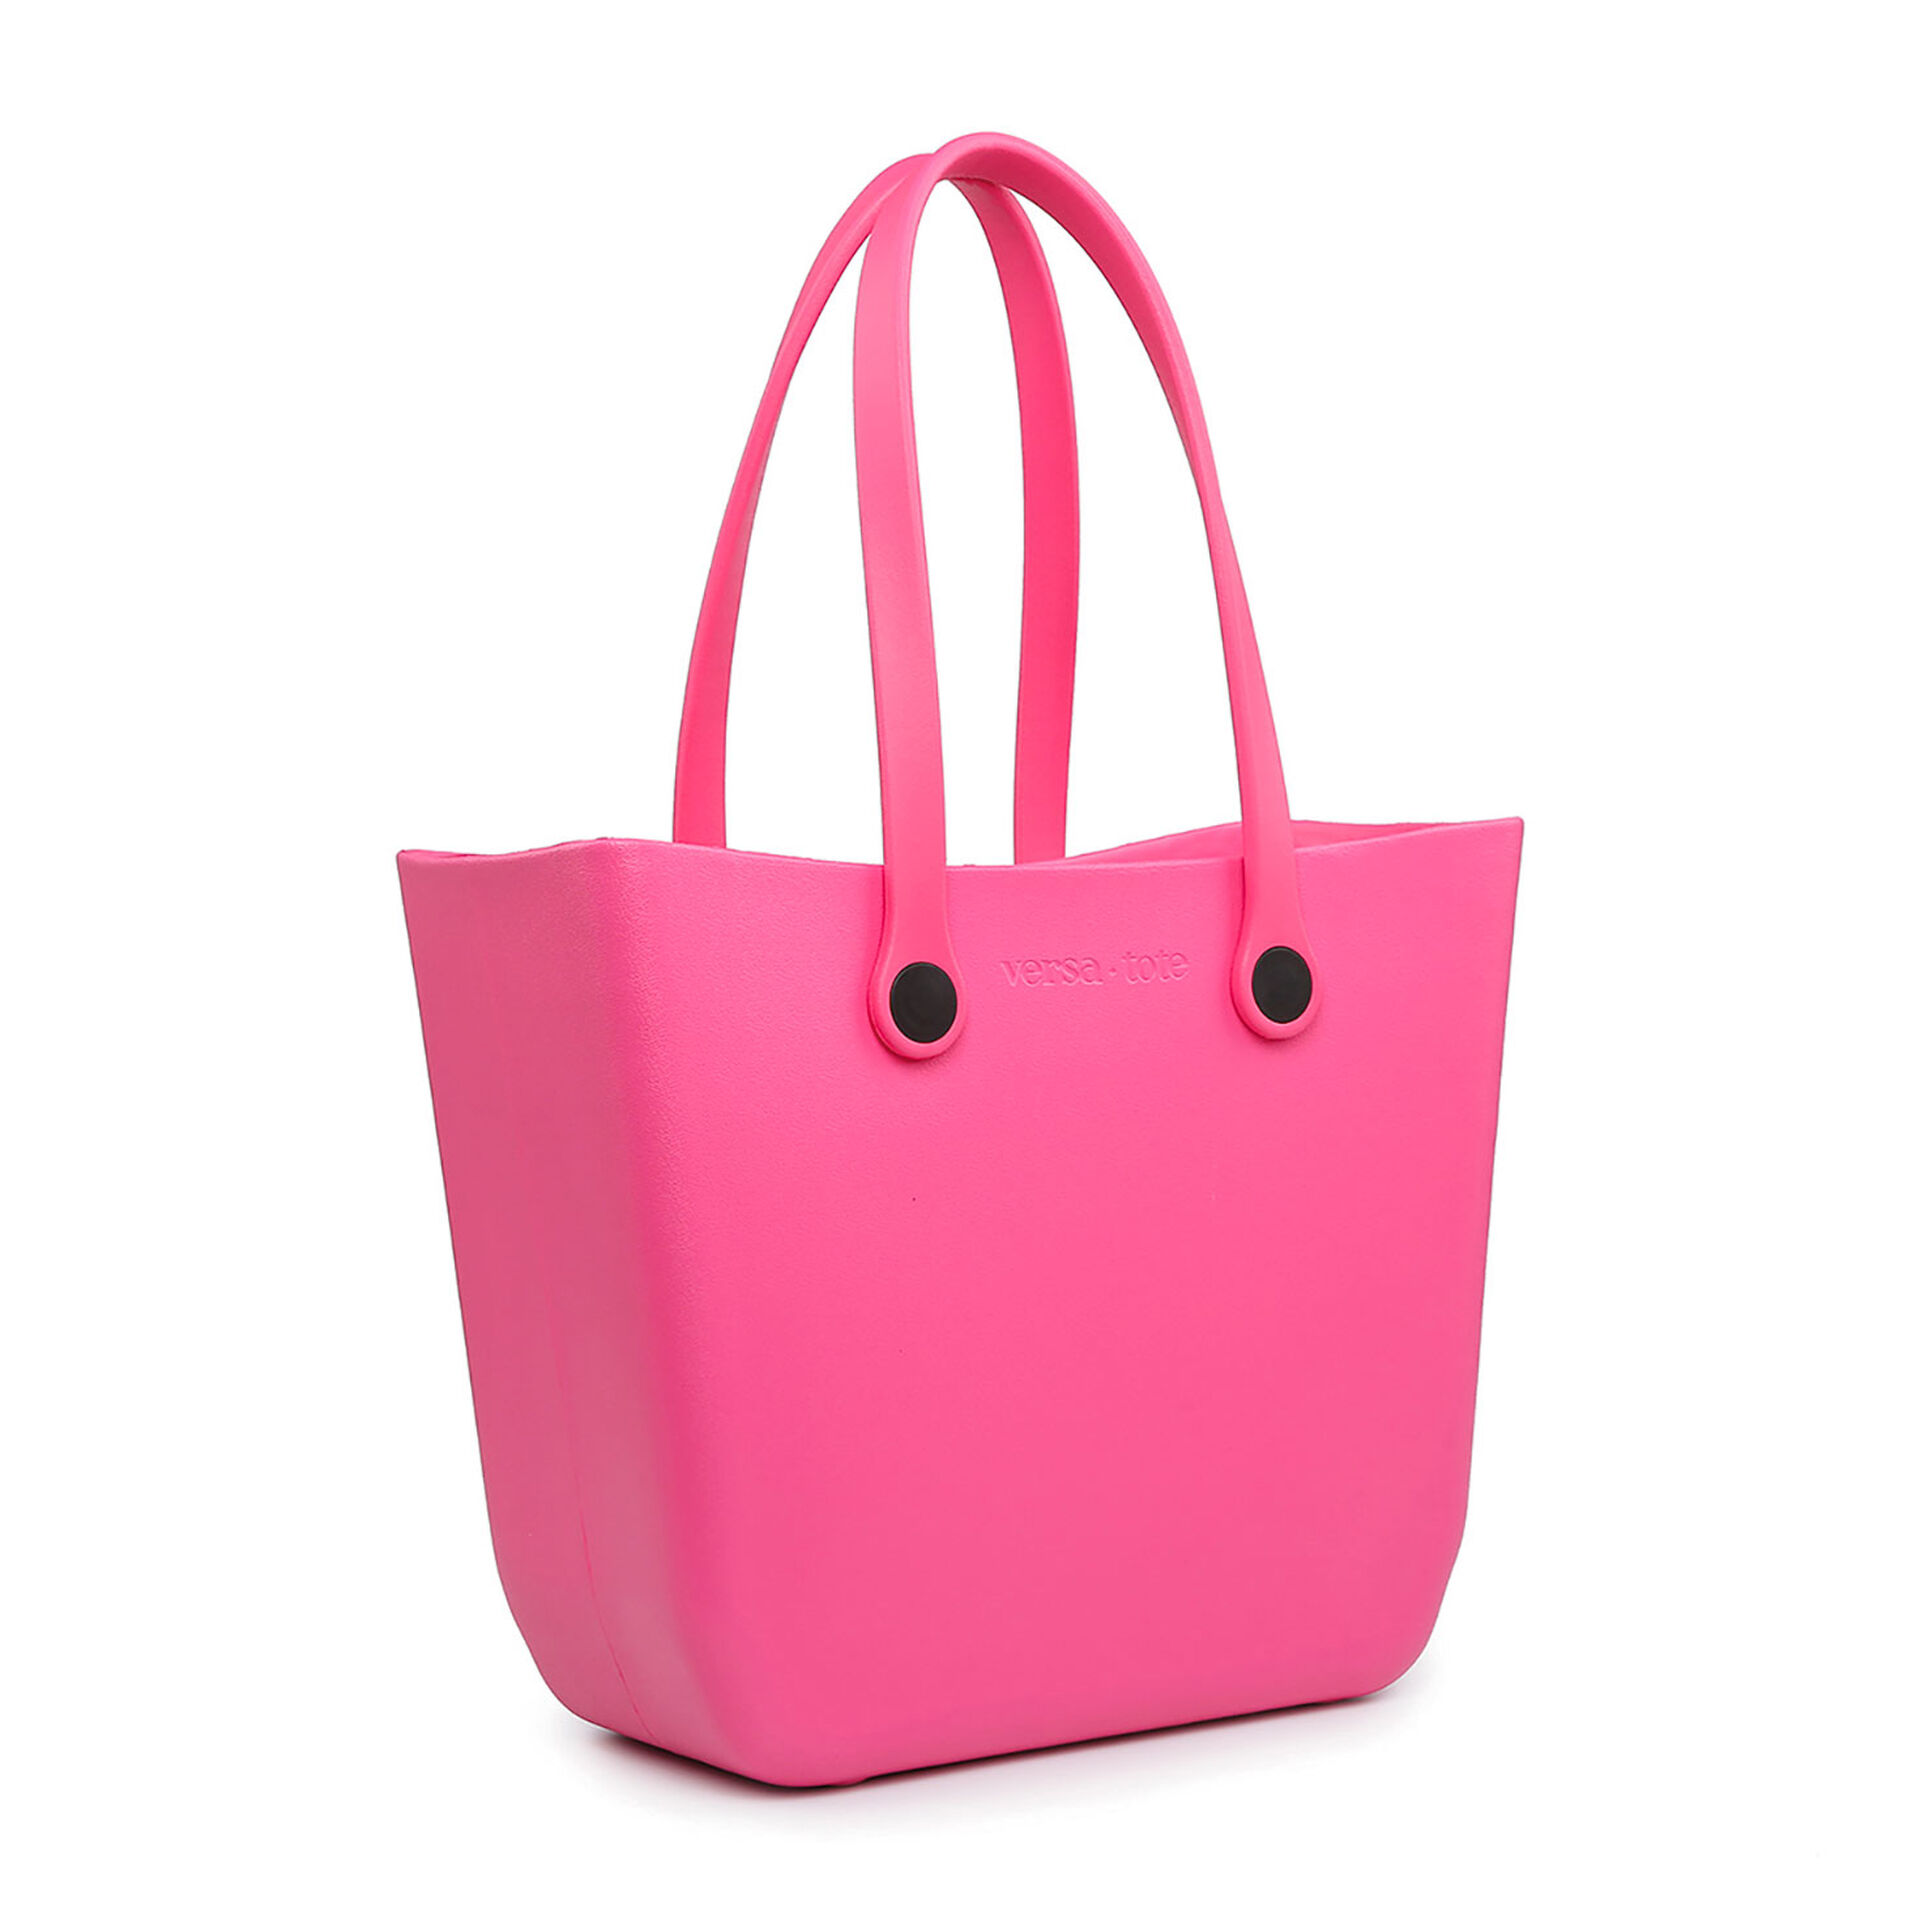 Jen & Co. Large Carrie Versa Tote Bag in Hot Pink - Handbags & Purses ...